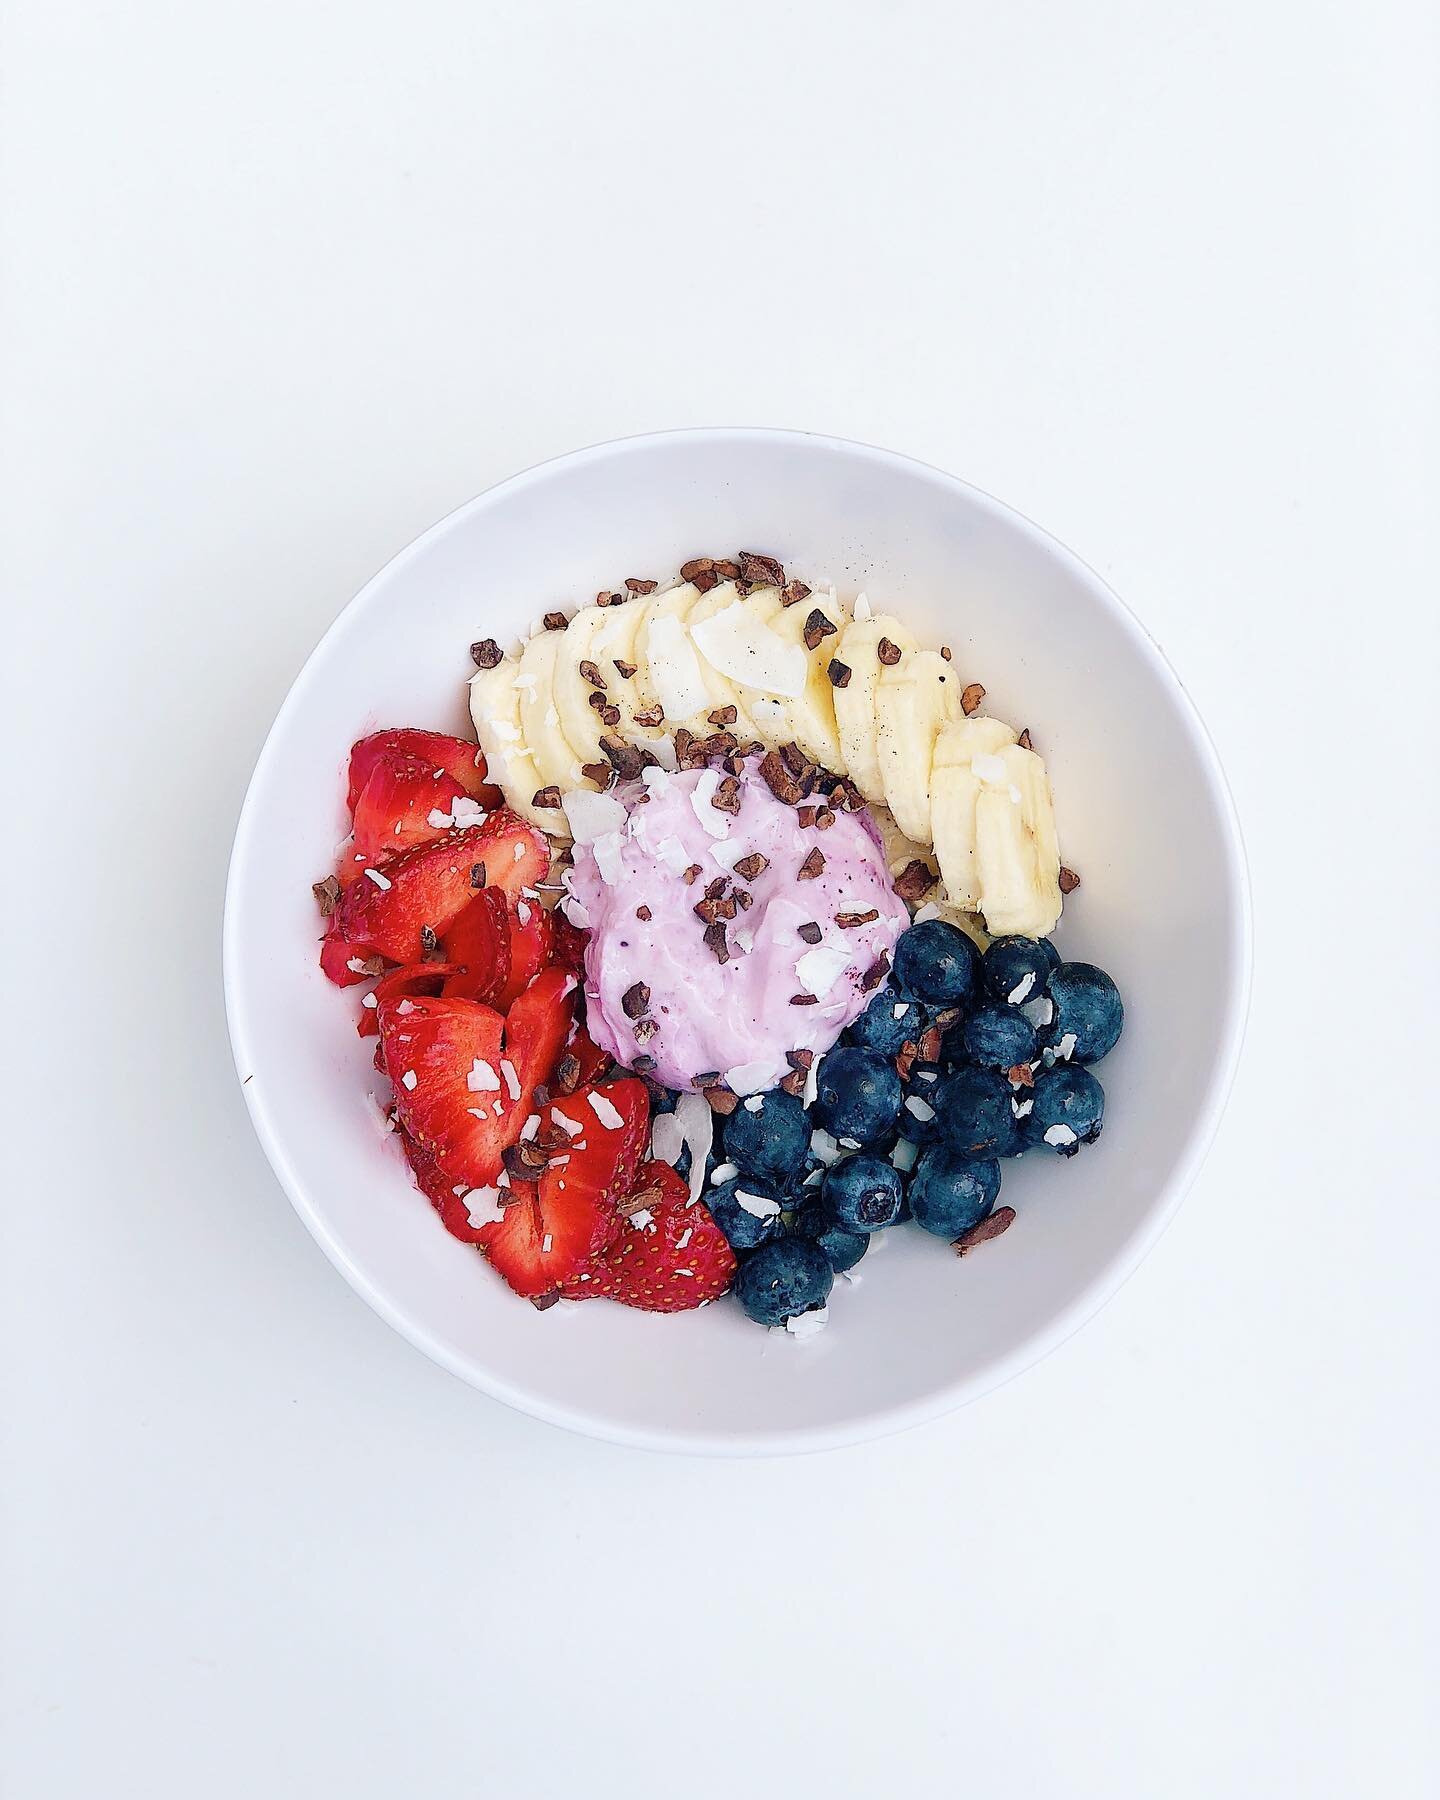 A seasonal fav - bircher muesli 😋 Overnight oats, coconut blueberry yogurt, strawberry, banana, blueberry, cocoa nibs, coconut flakes!!!! Gluten free &amp; vegan as is ✨